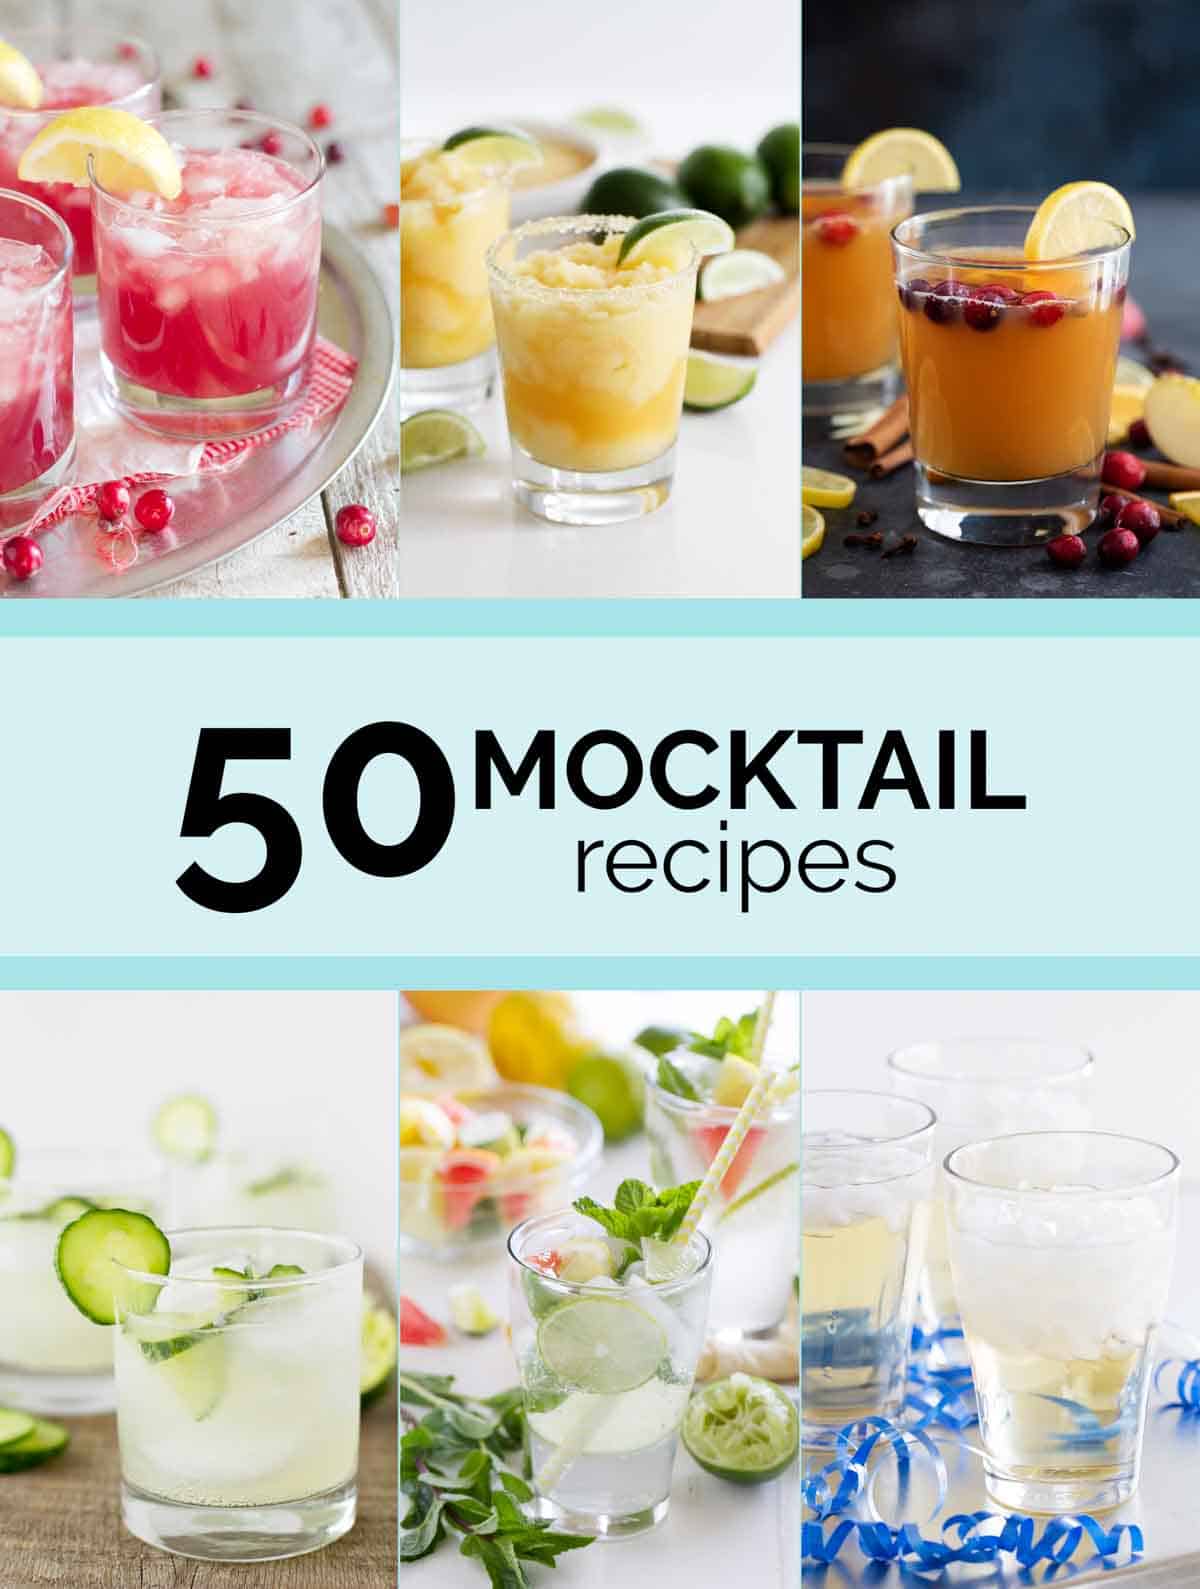 https://www.tasteandtellblog.com/wp-content/uploads/2017/12/50-Mocktail-Recipes.jpg